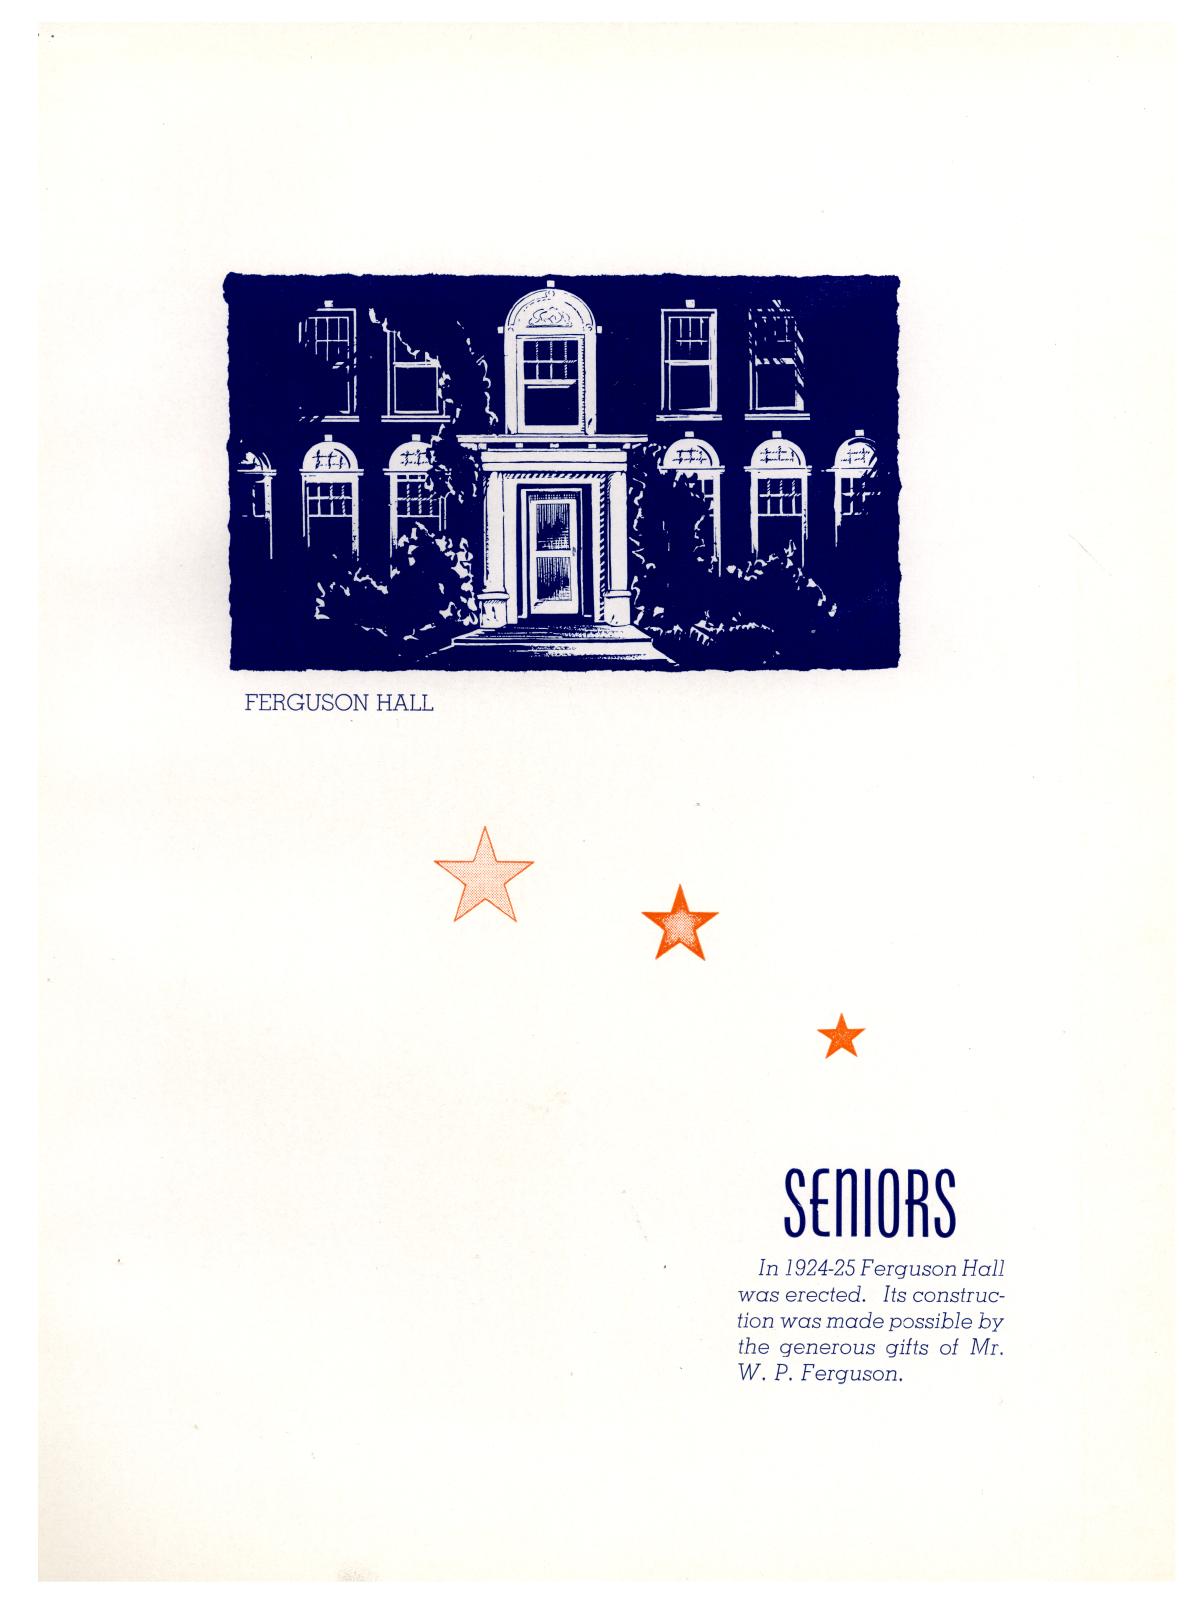 The Bronco, Yearbook of Hardin-Simmons University, 1940
                                                
                                                    40
                                                